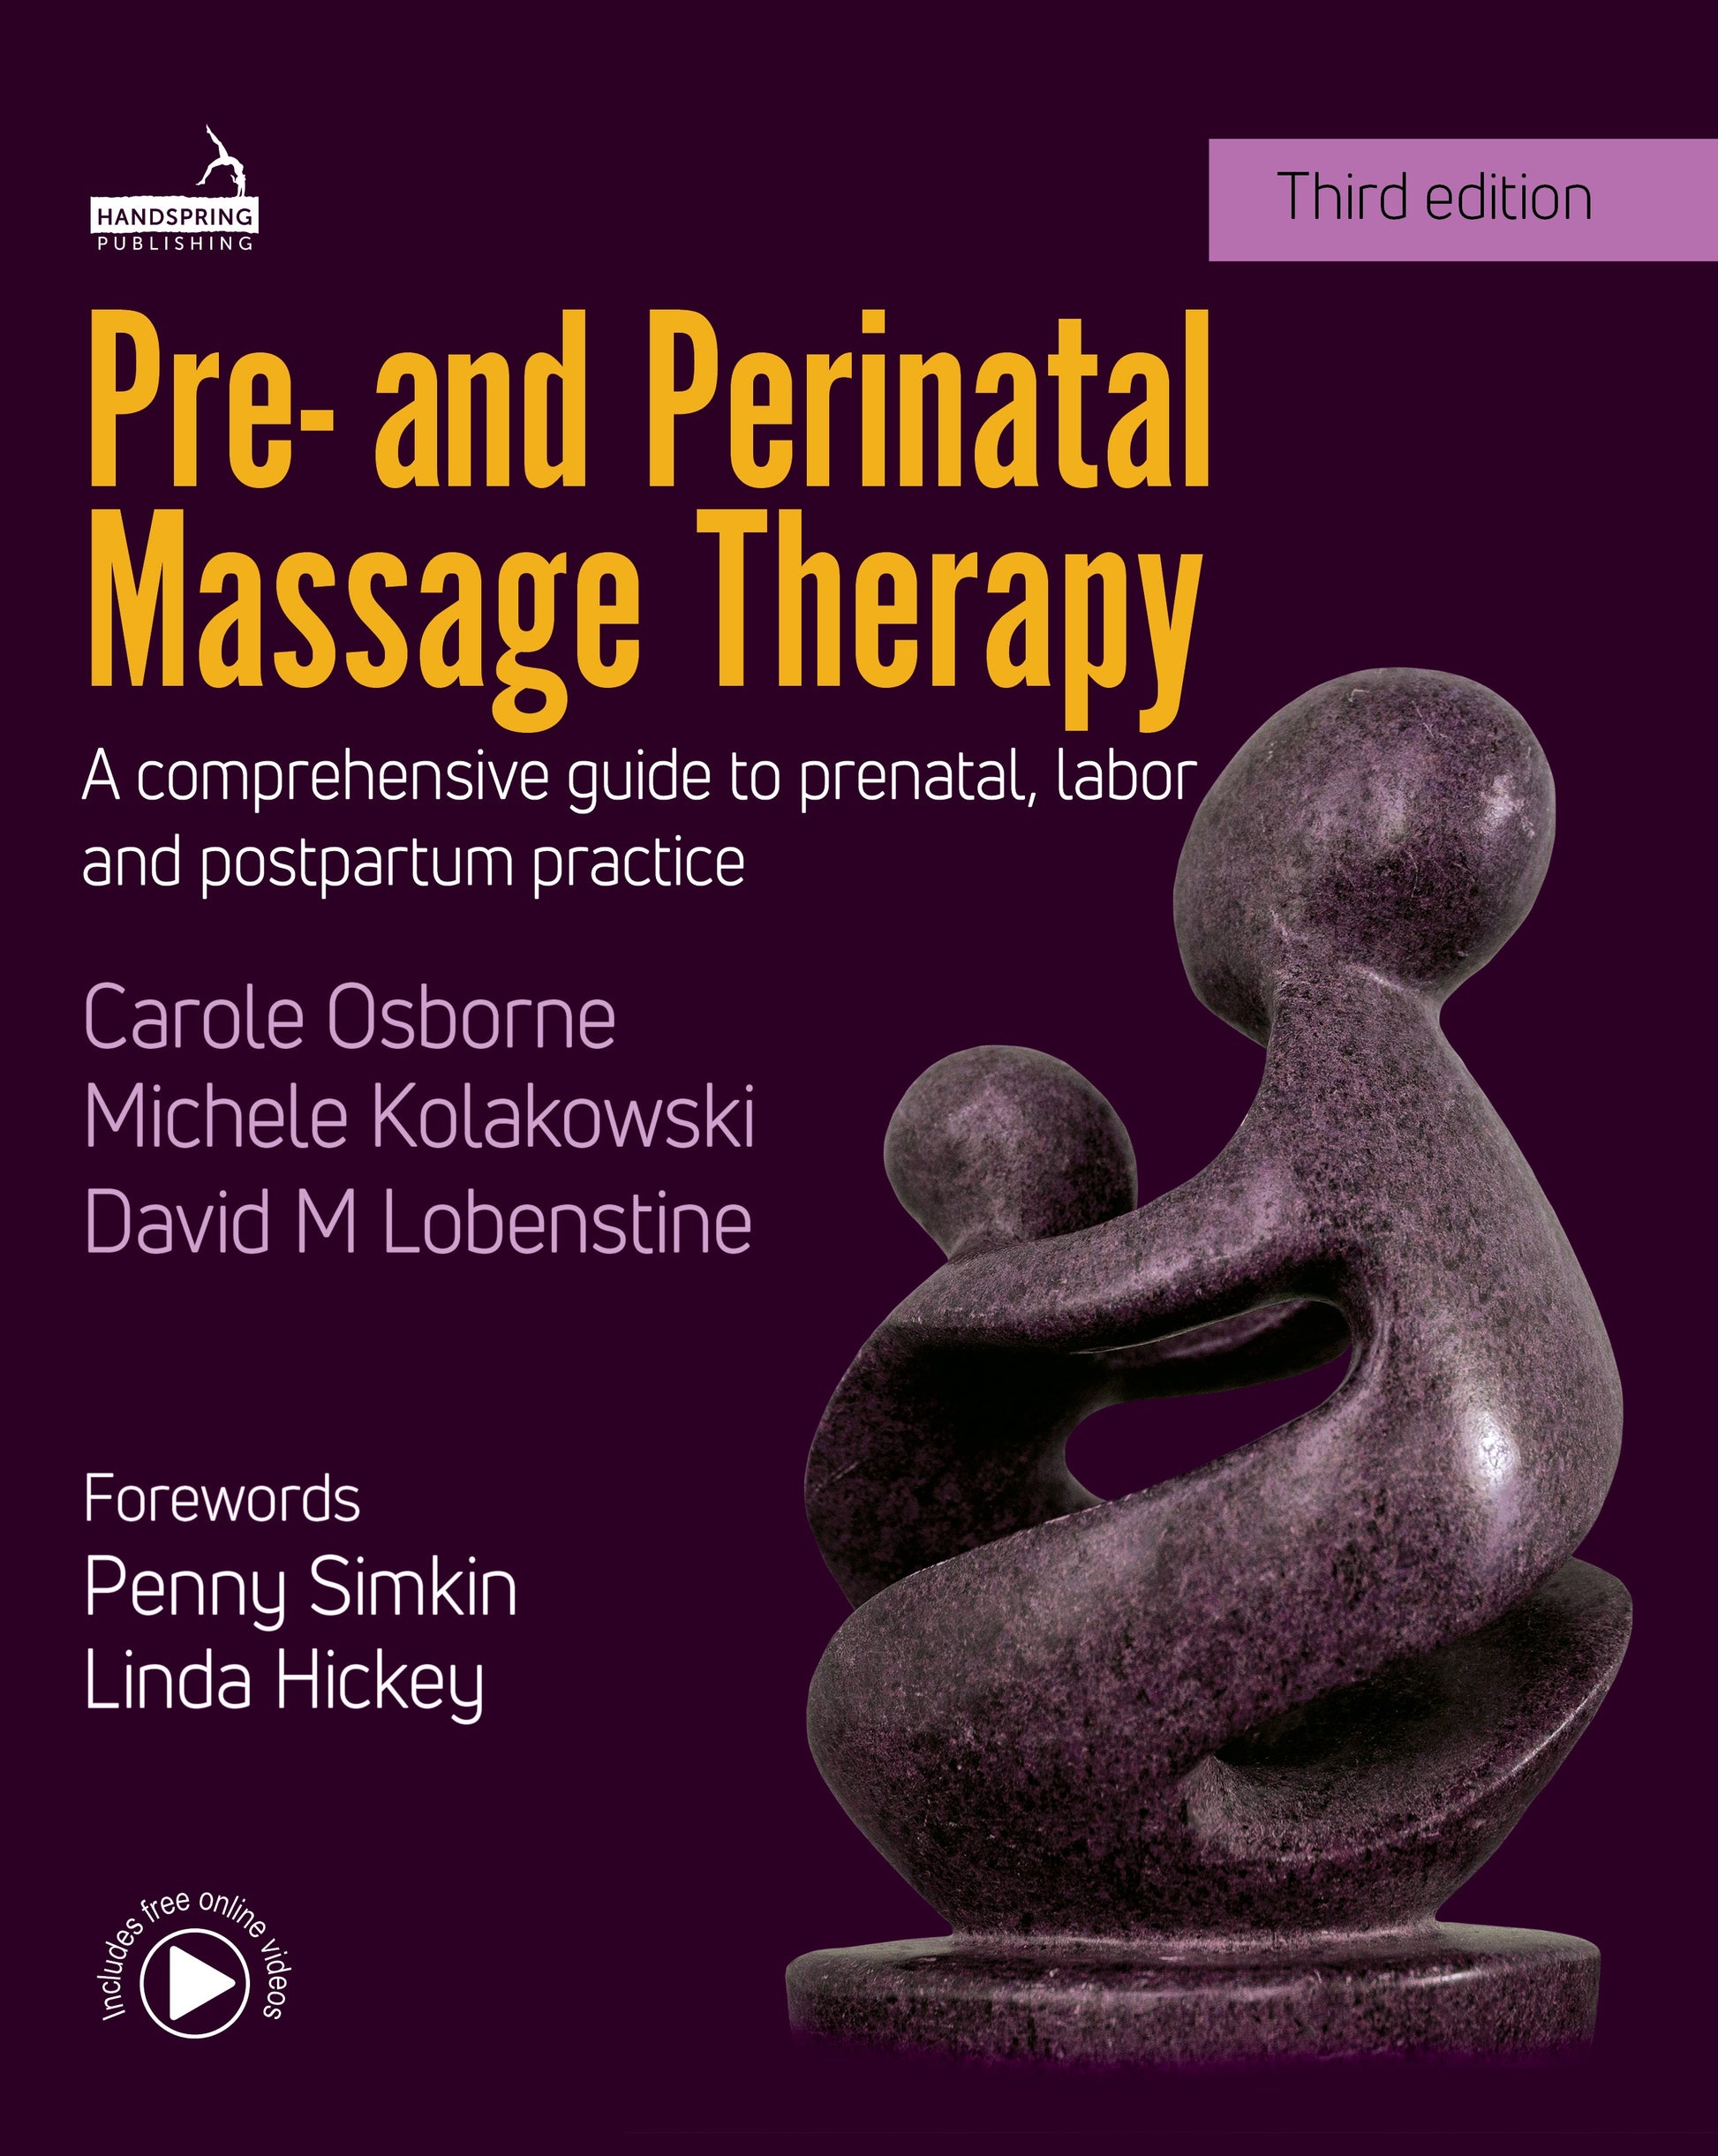 Pre- and Perinatal Massage Therapy by Michele Kolakowski, David Lobenstine, Carole Osborne